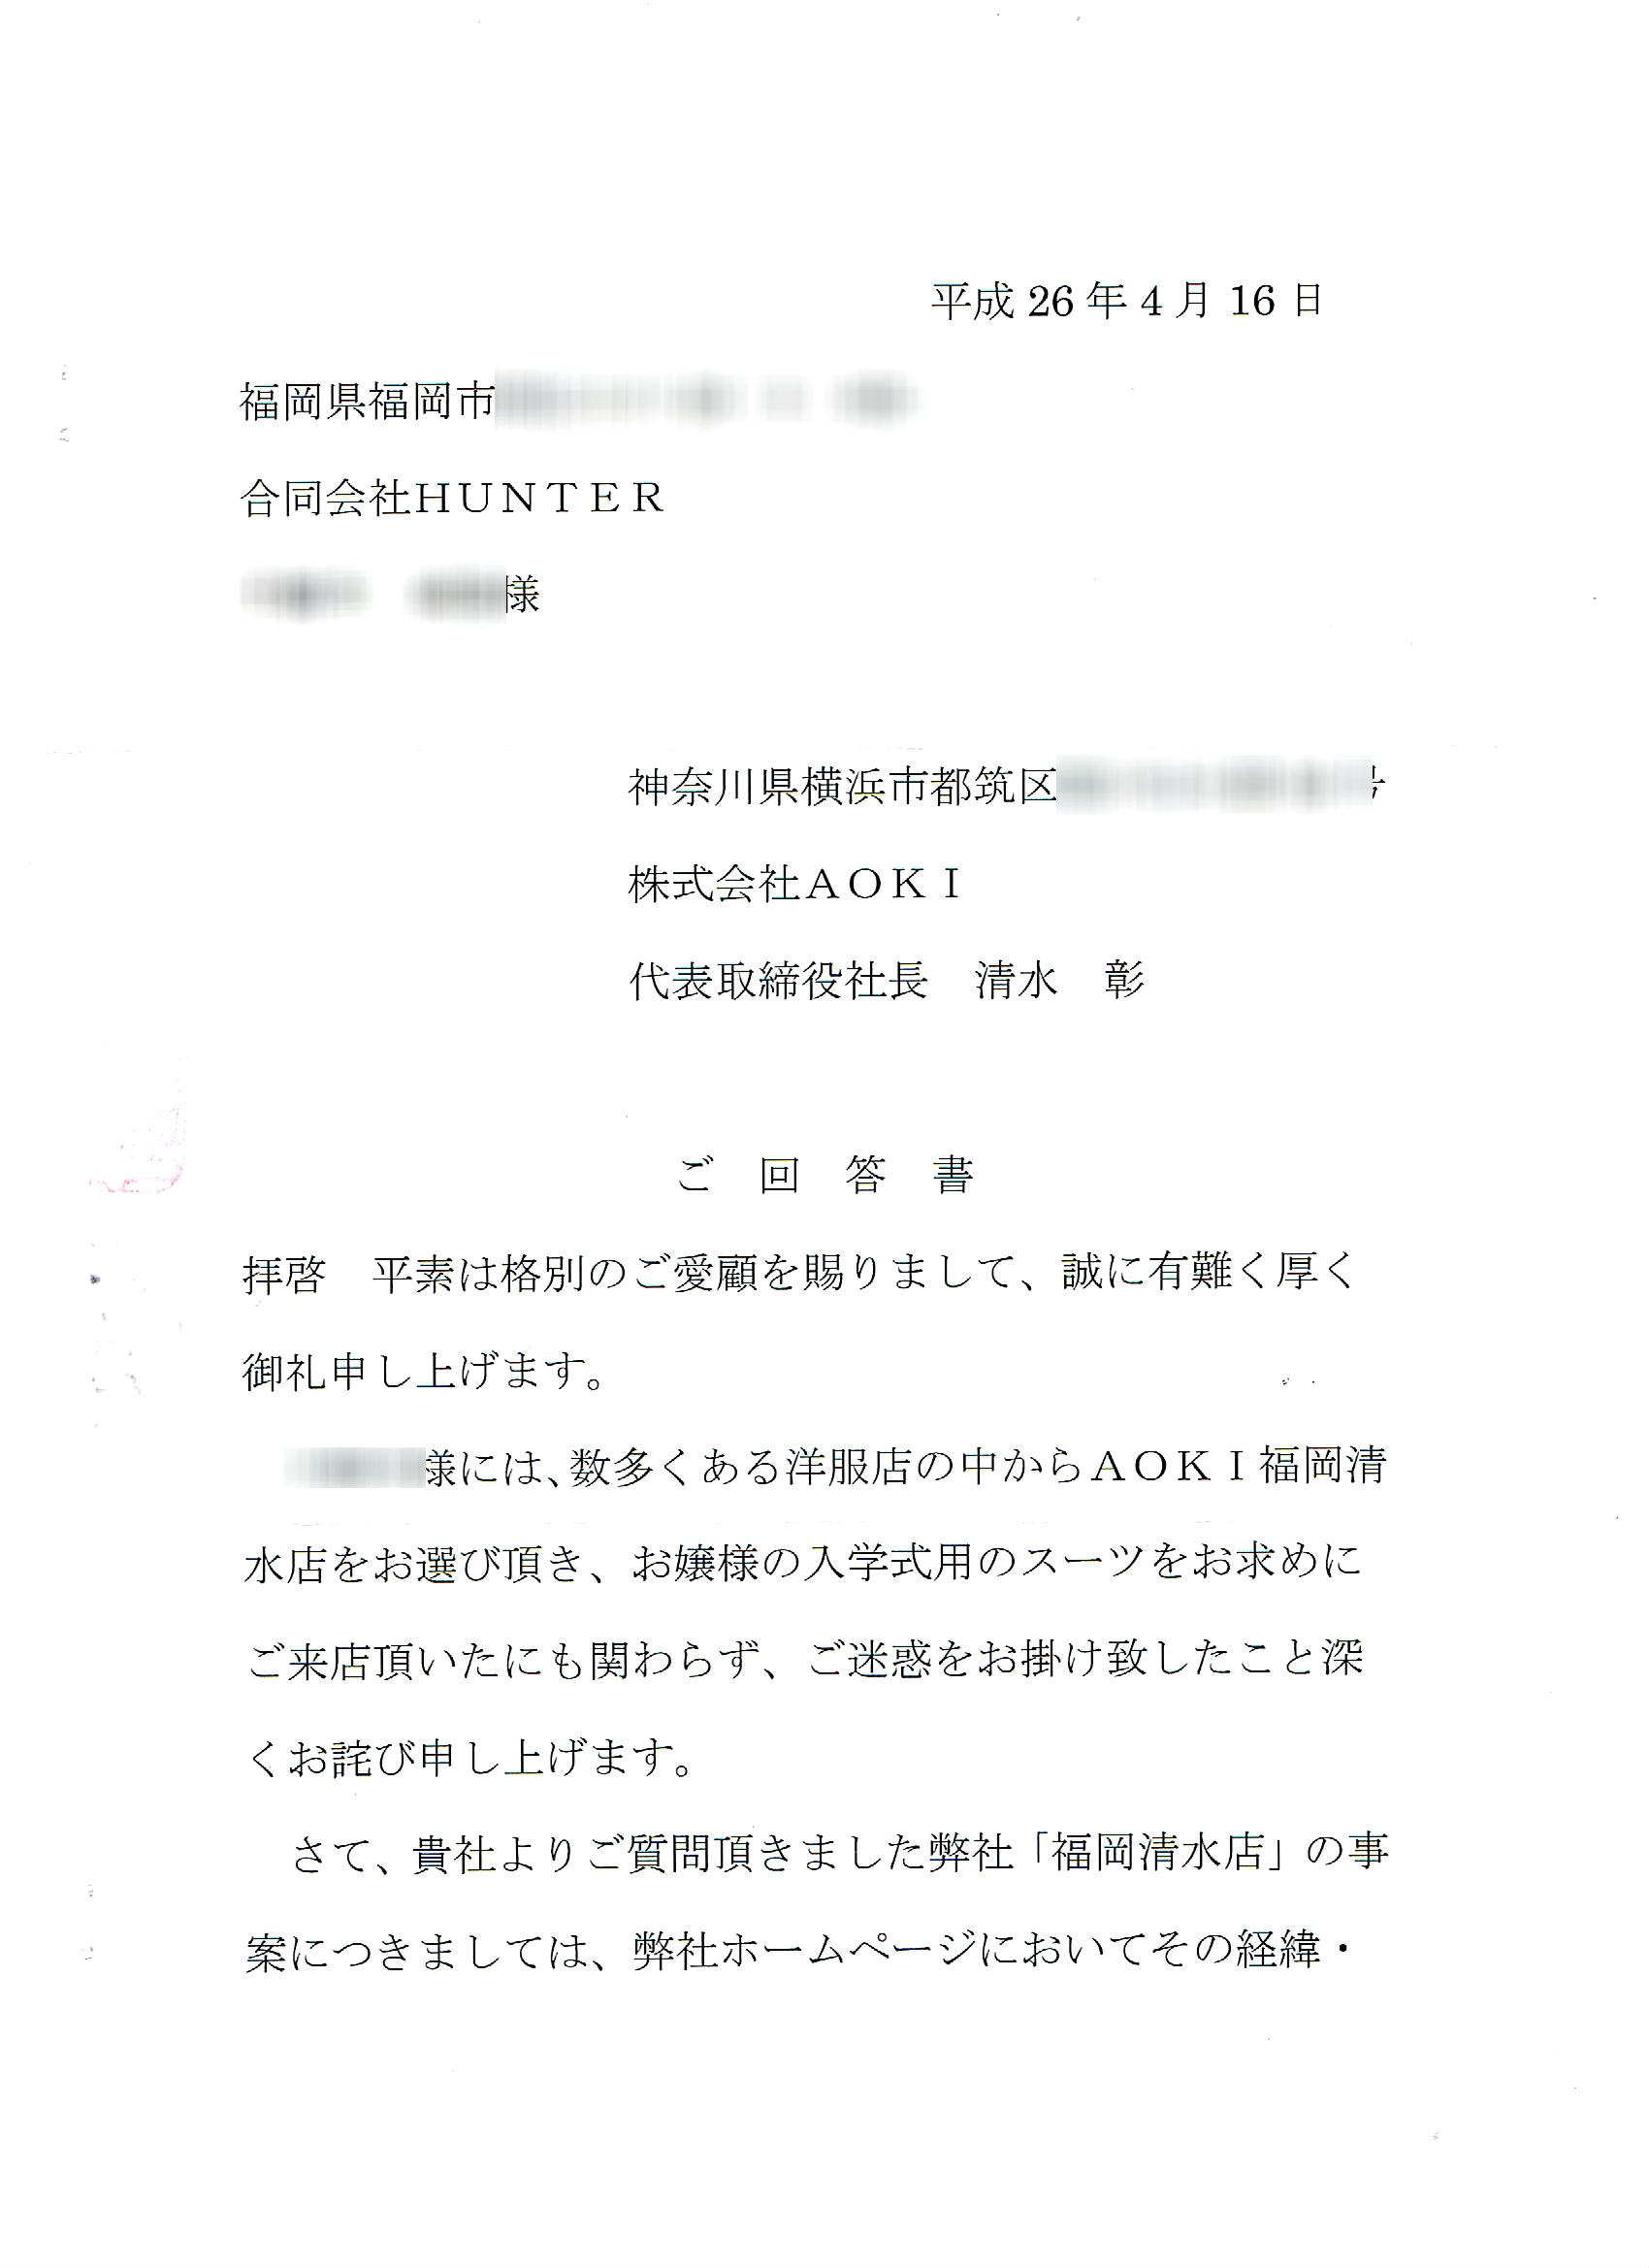 http://hunter-investigate.jp/news/2014/06/26/aoki1.jpg